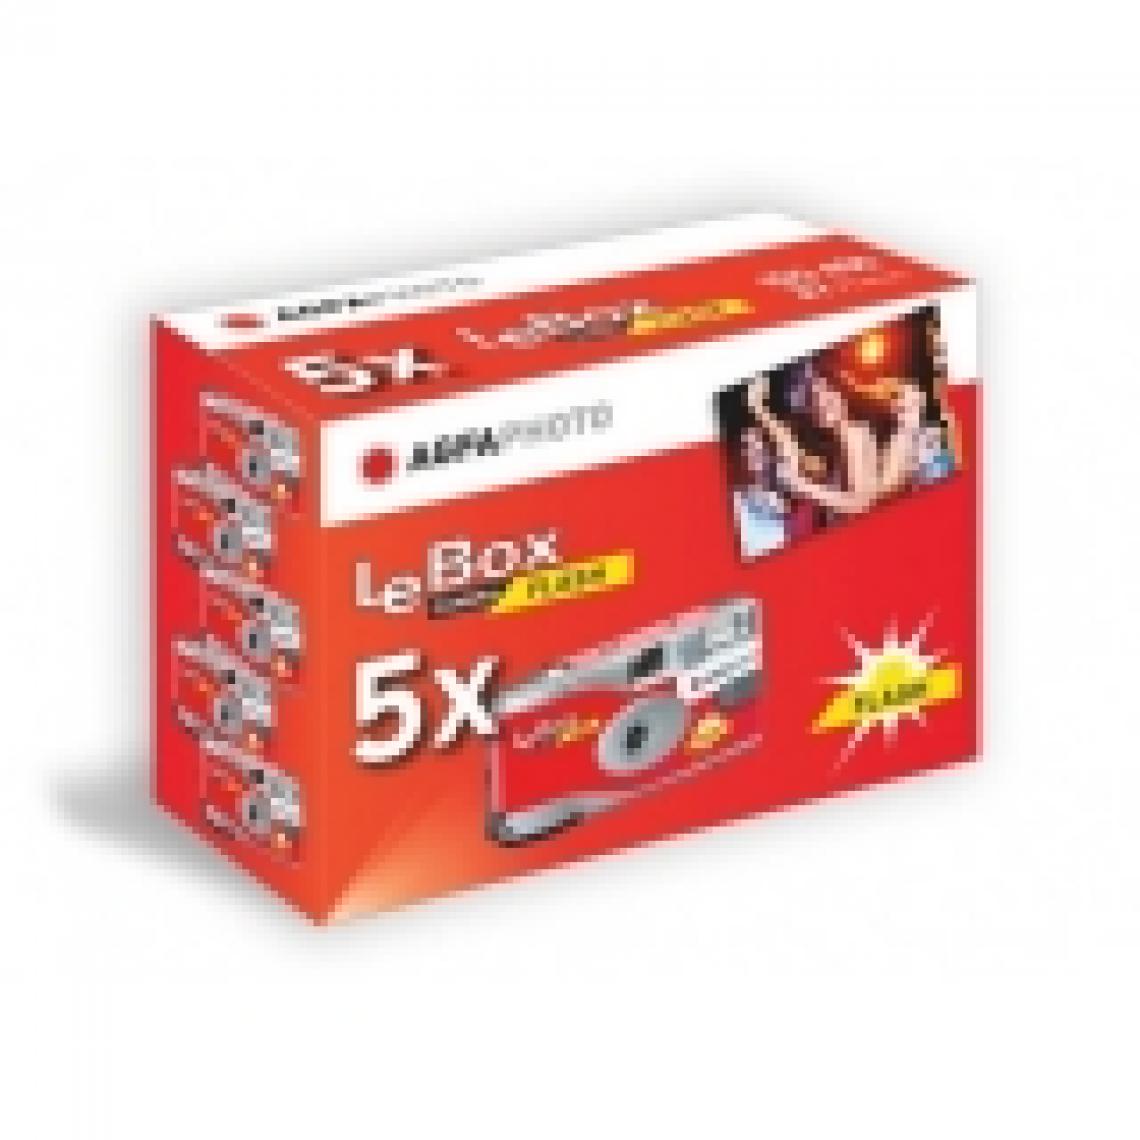 Agfaphoto - AGFA PHOTO - LeBox 400 27 Flash - 2 Pack de 5-Rouge-35mm - Appareil compact